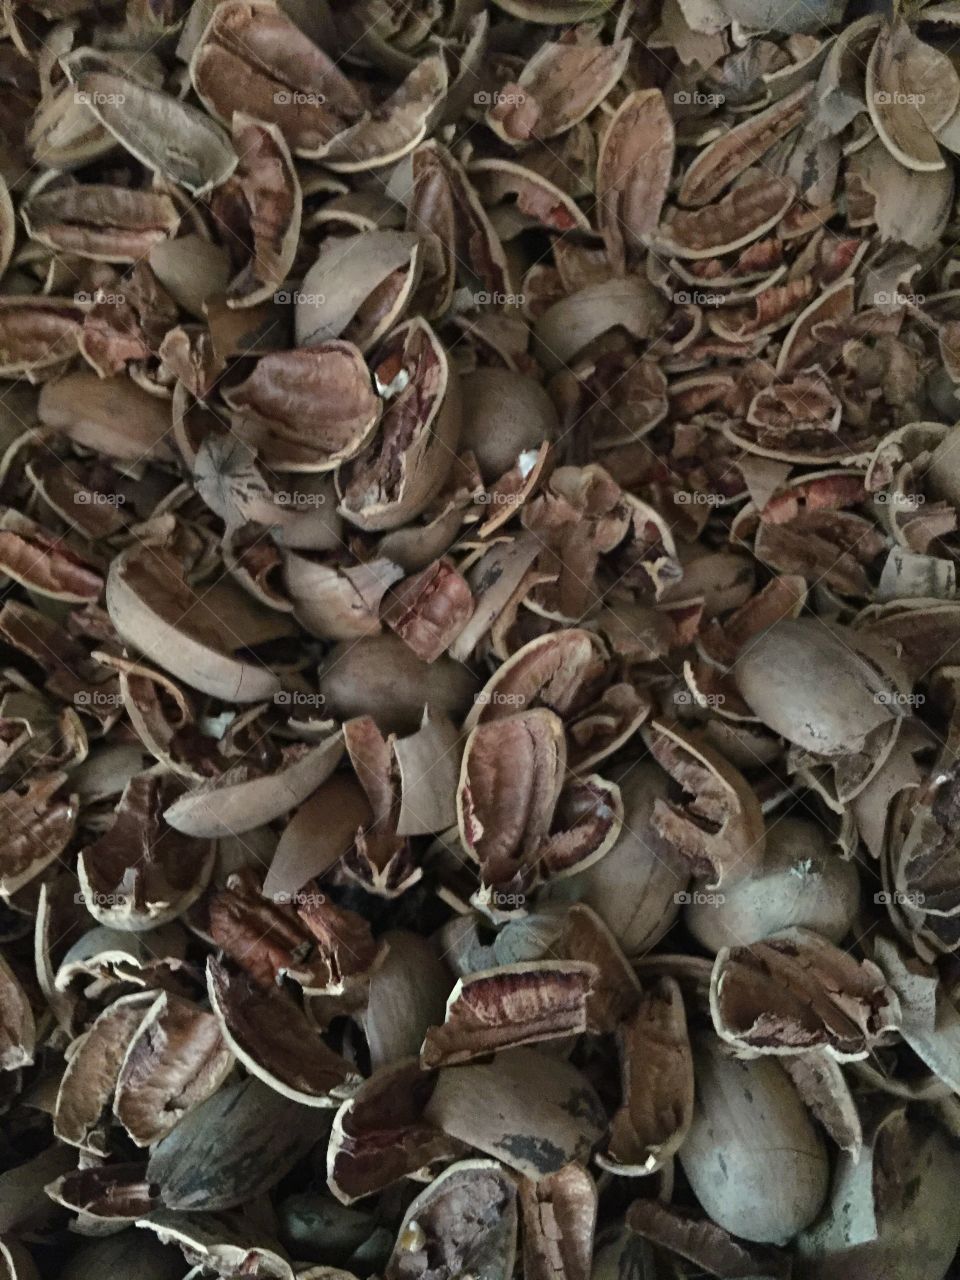 Pecan shells